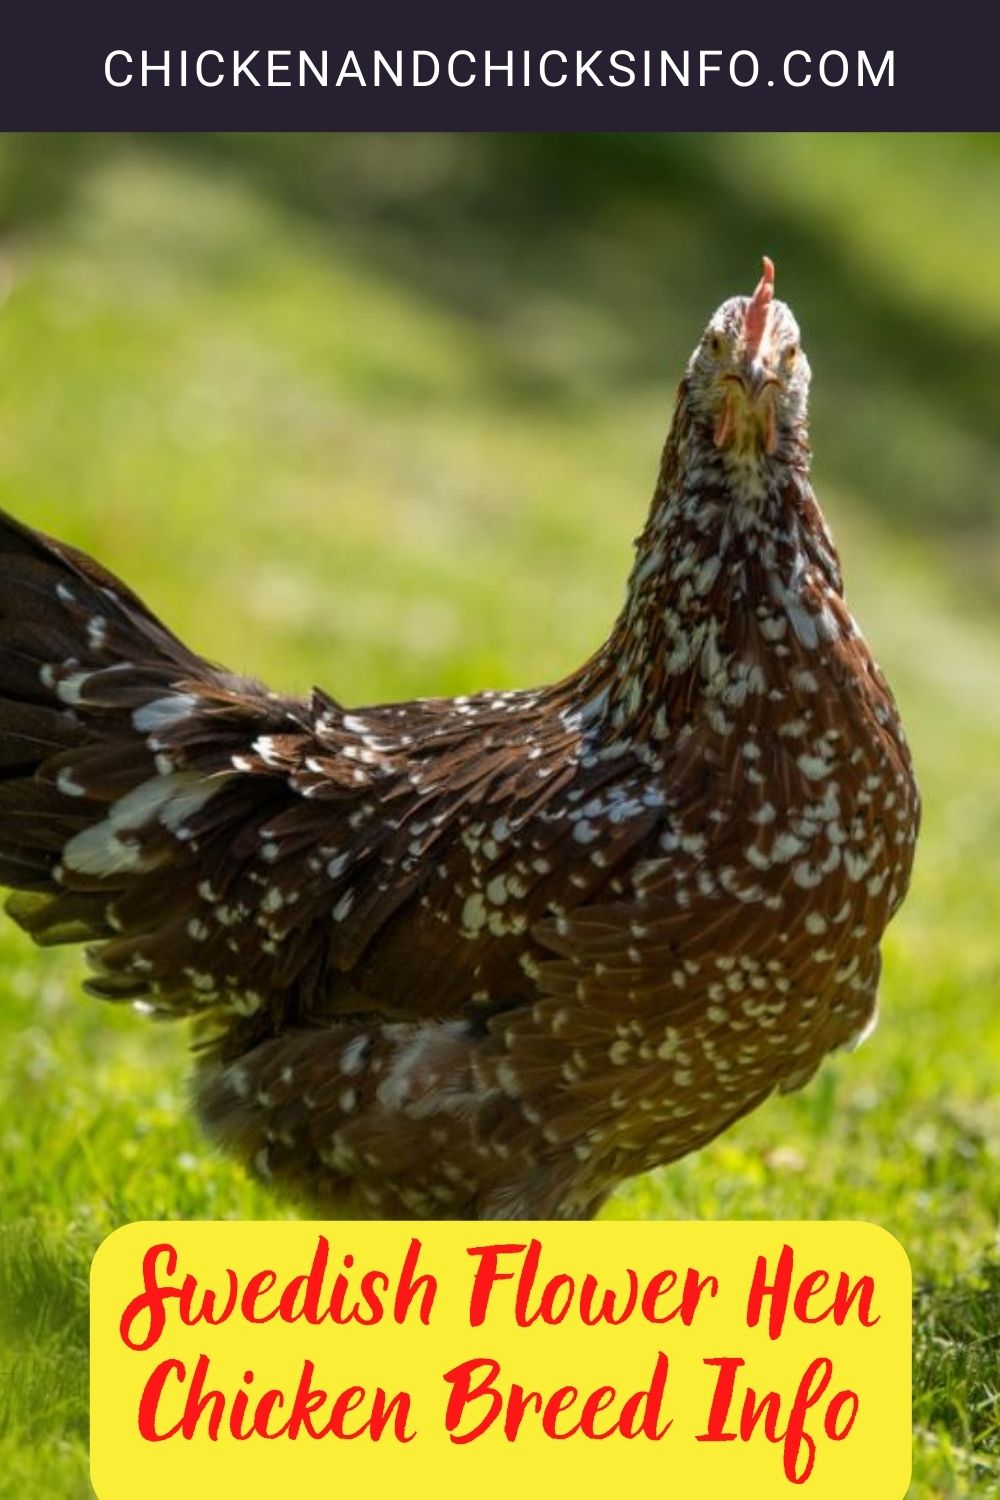 Swedish Flower Hen Chicken Breed Info pinterset image.